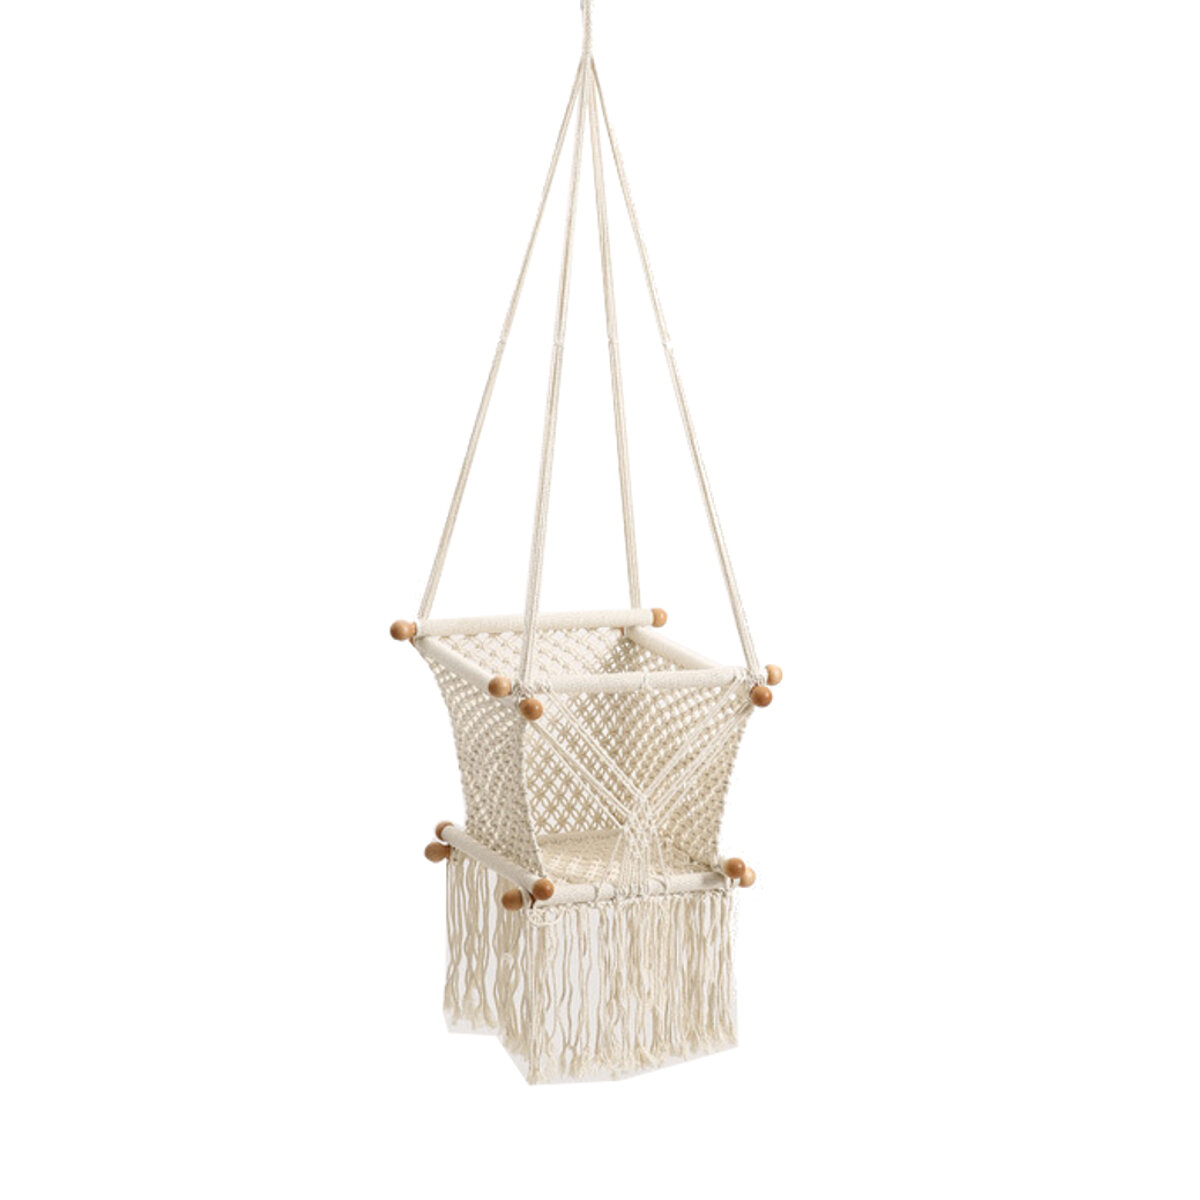 50KG Bearing Patio Swings Weaving Basket Hanging Chair Cotton Rope For Children Room Backyard Garden